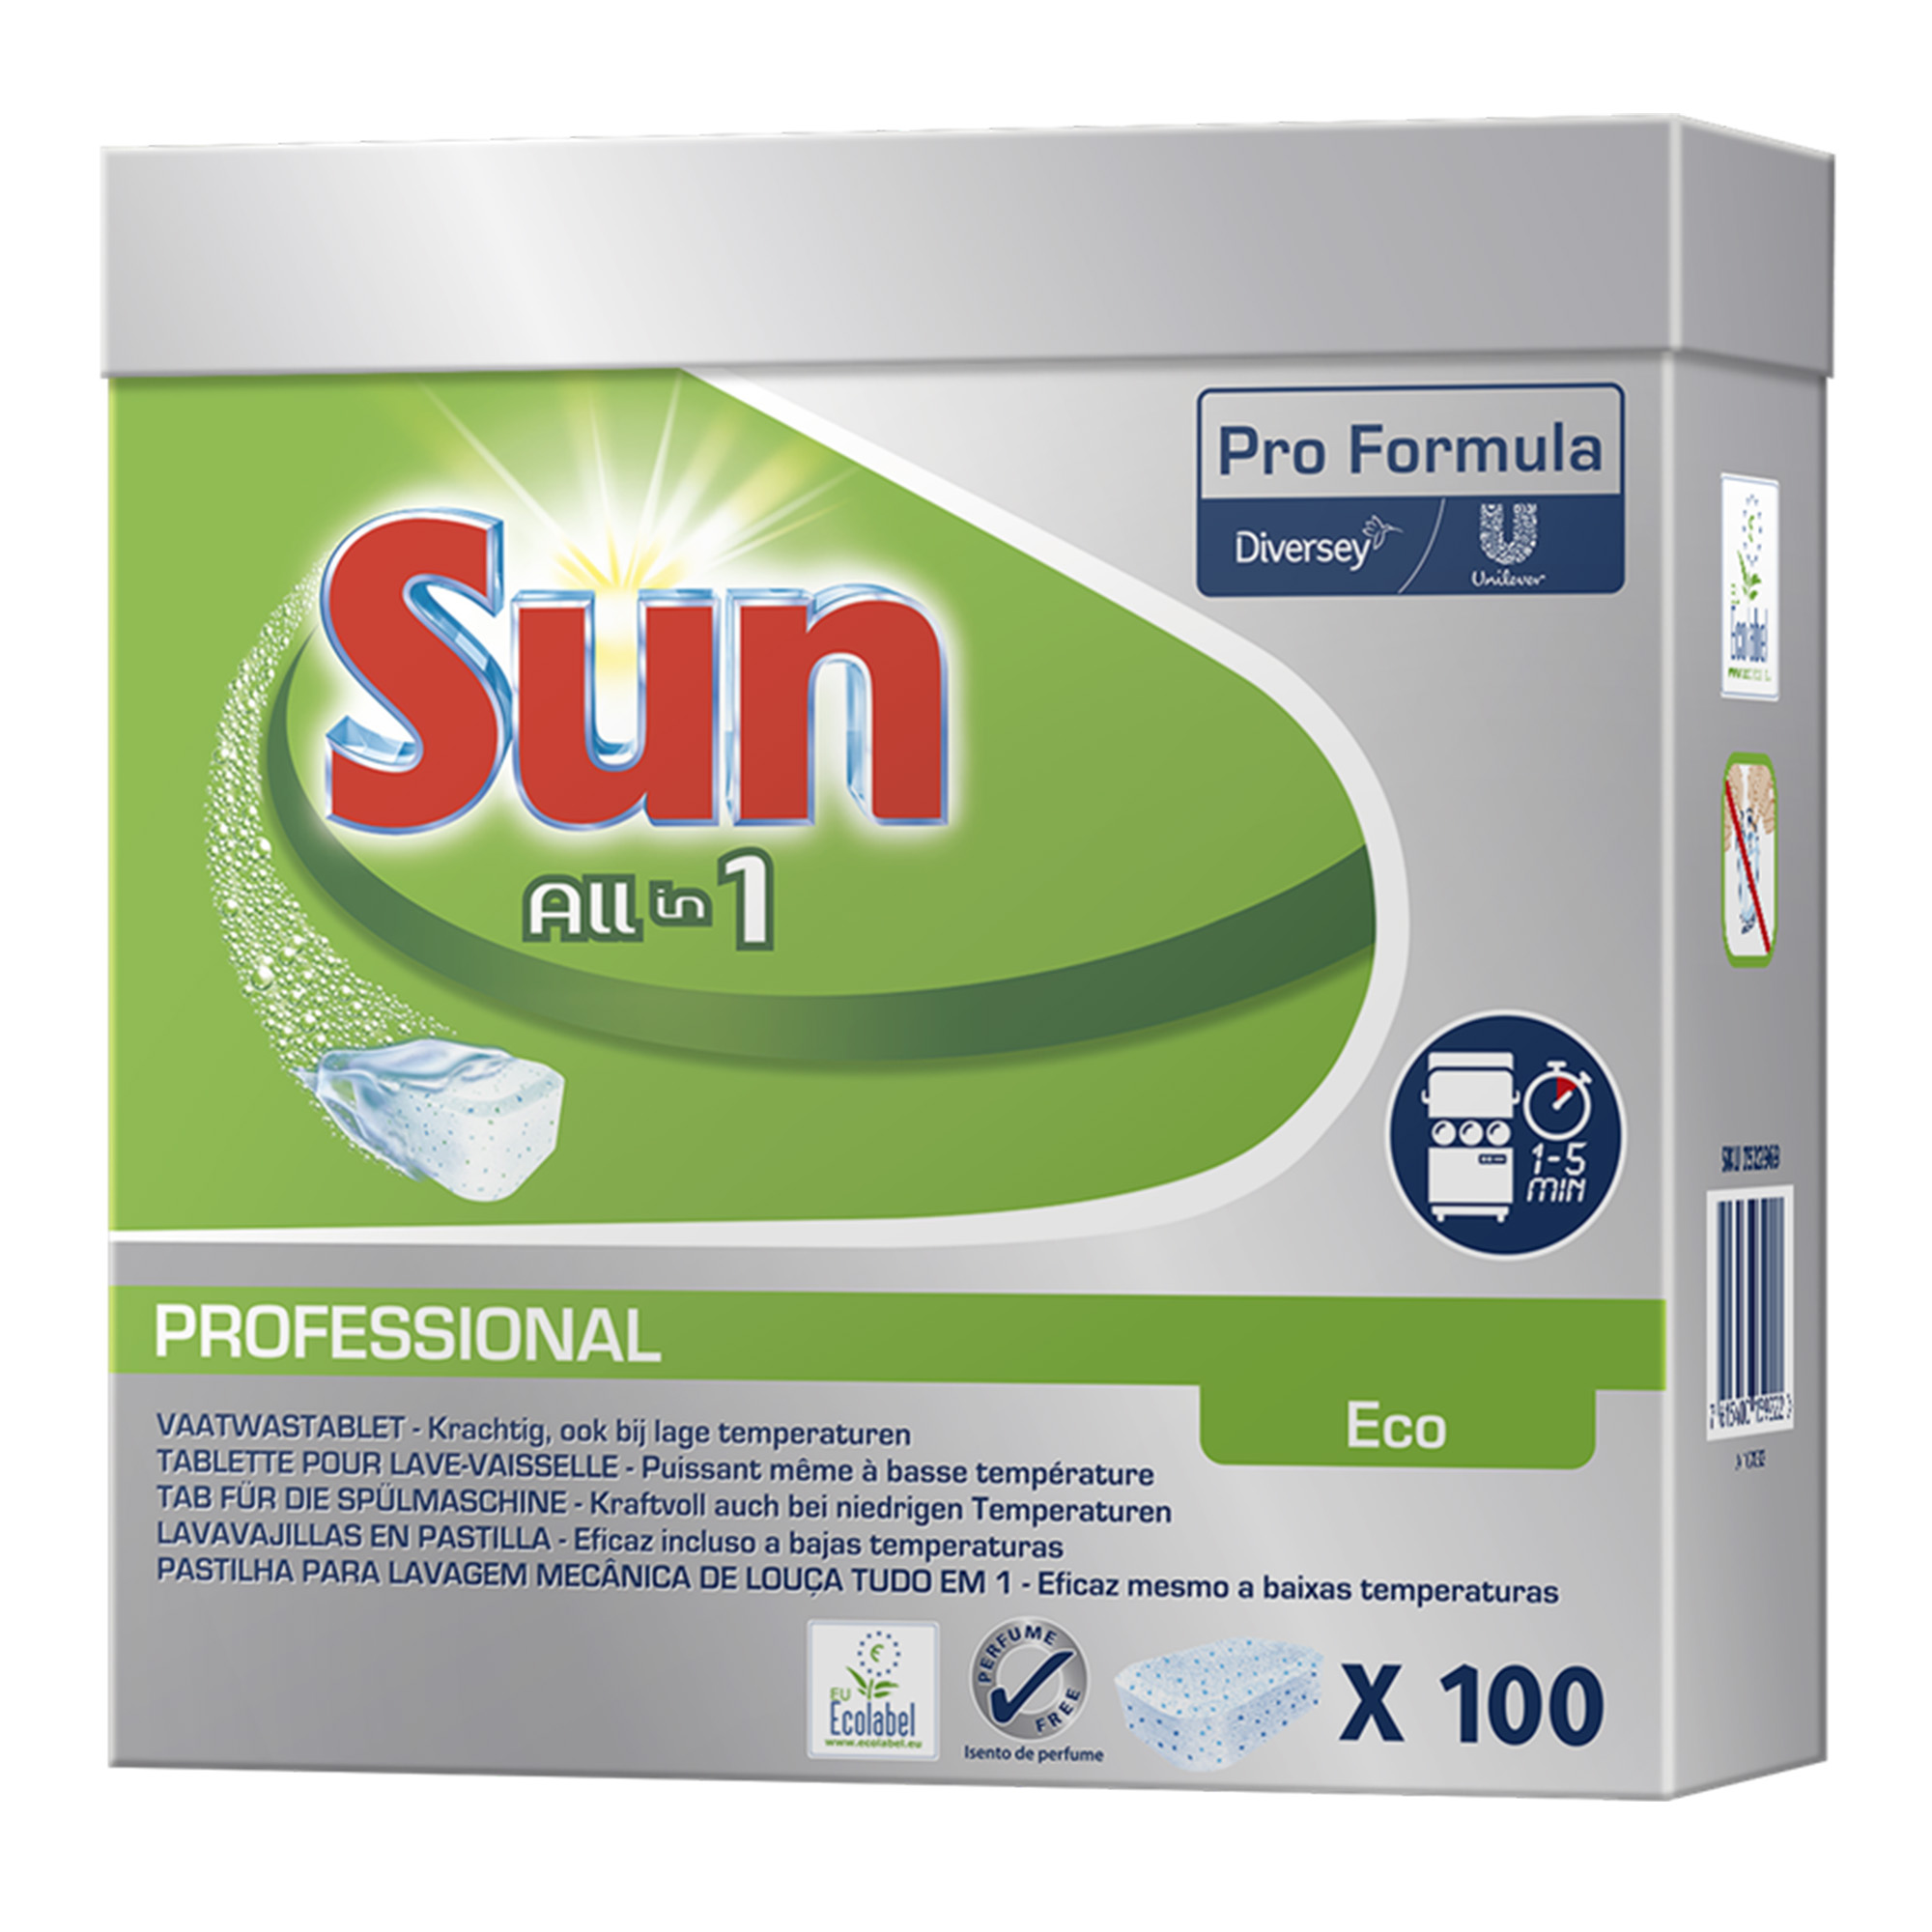 Sun Professional All in 1 Eco Geschirrreiniger-Tabs 100 Stück 7522969-1_1